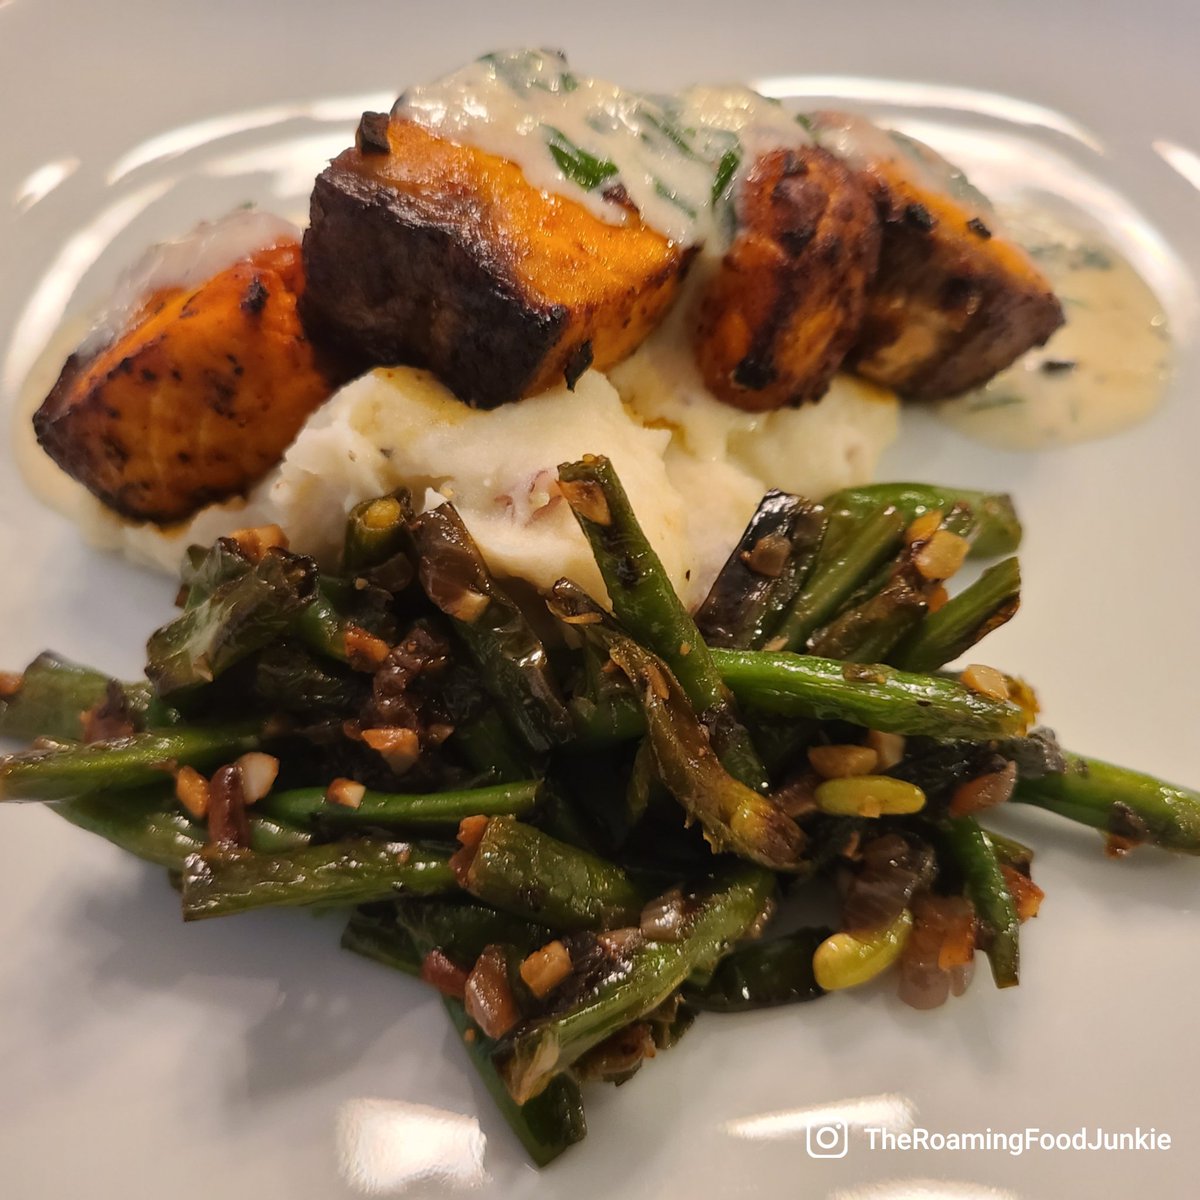 Nug life #salmon #garliccreamsauce #smashedpotatoes #blisteredgreenbeans #airfriedrecipes #dinner #homemade #inthekitchenwithtk #latepost